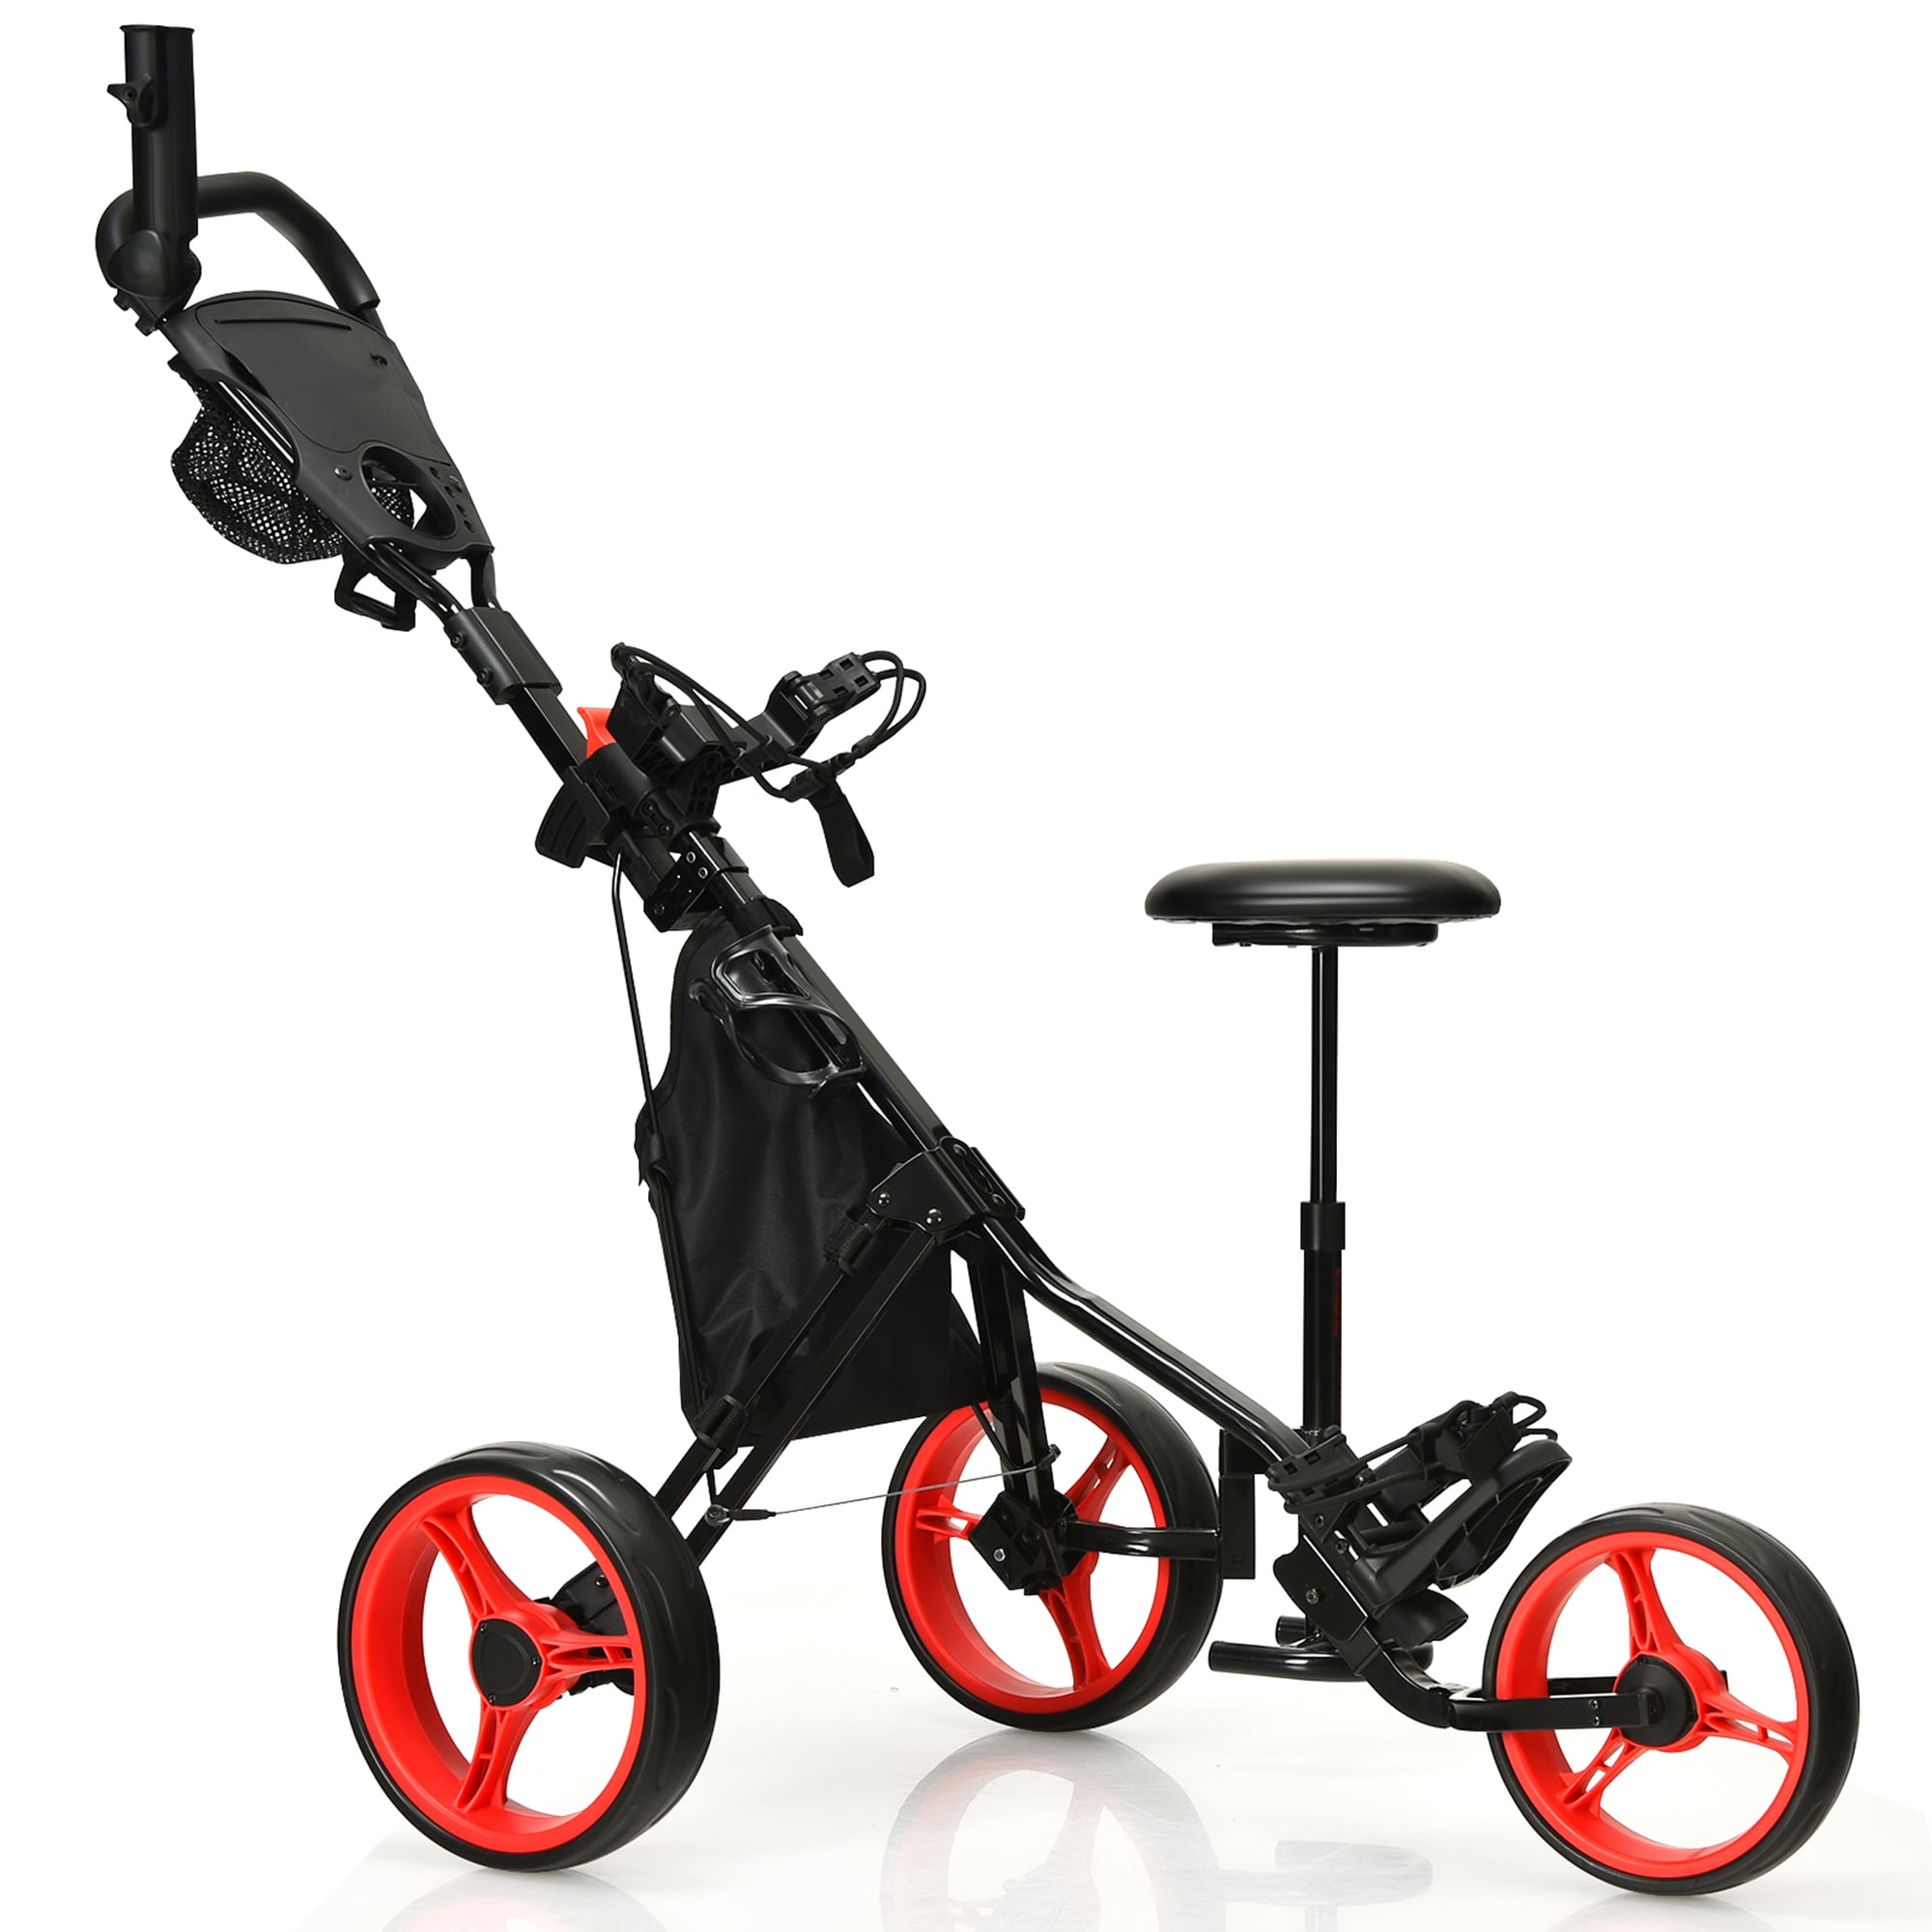 3 Wheel Foldable Push Pull Golf Cart Club Trolley w/ Seat Scoreboard Bag Red